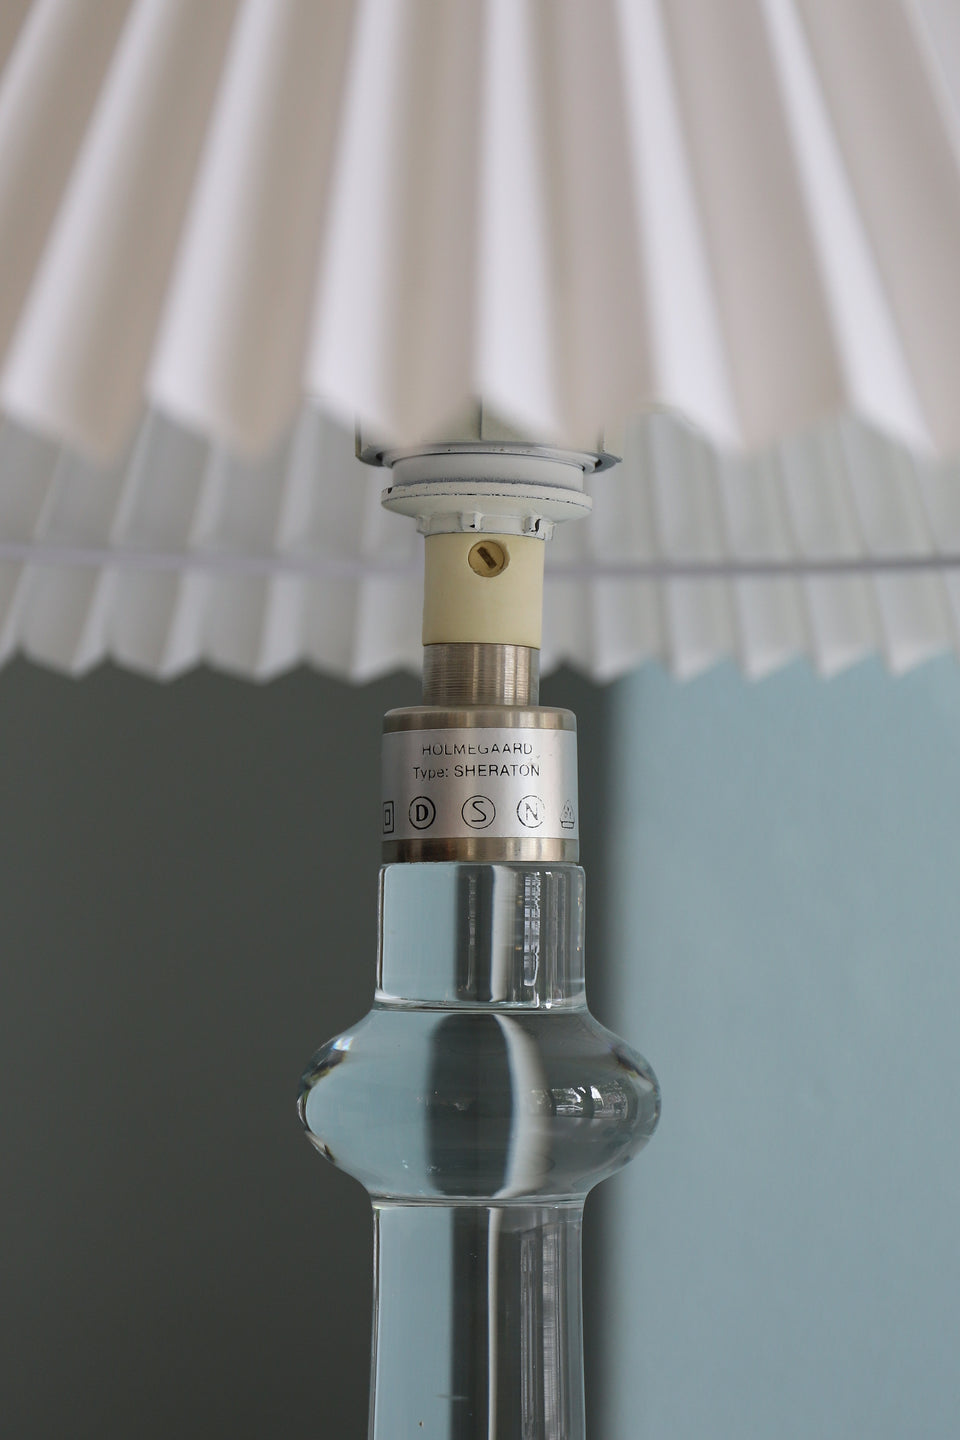 Holmegaard Sheraton Table Lamp Michael Bang/ホルムガード シェラトン テーブルランプ 間接照明 デンマークヴィンテージ